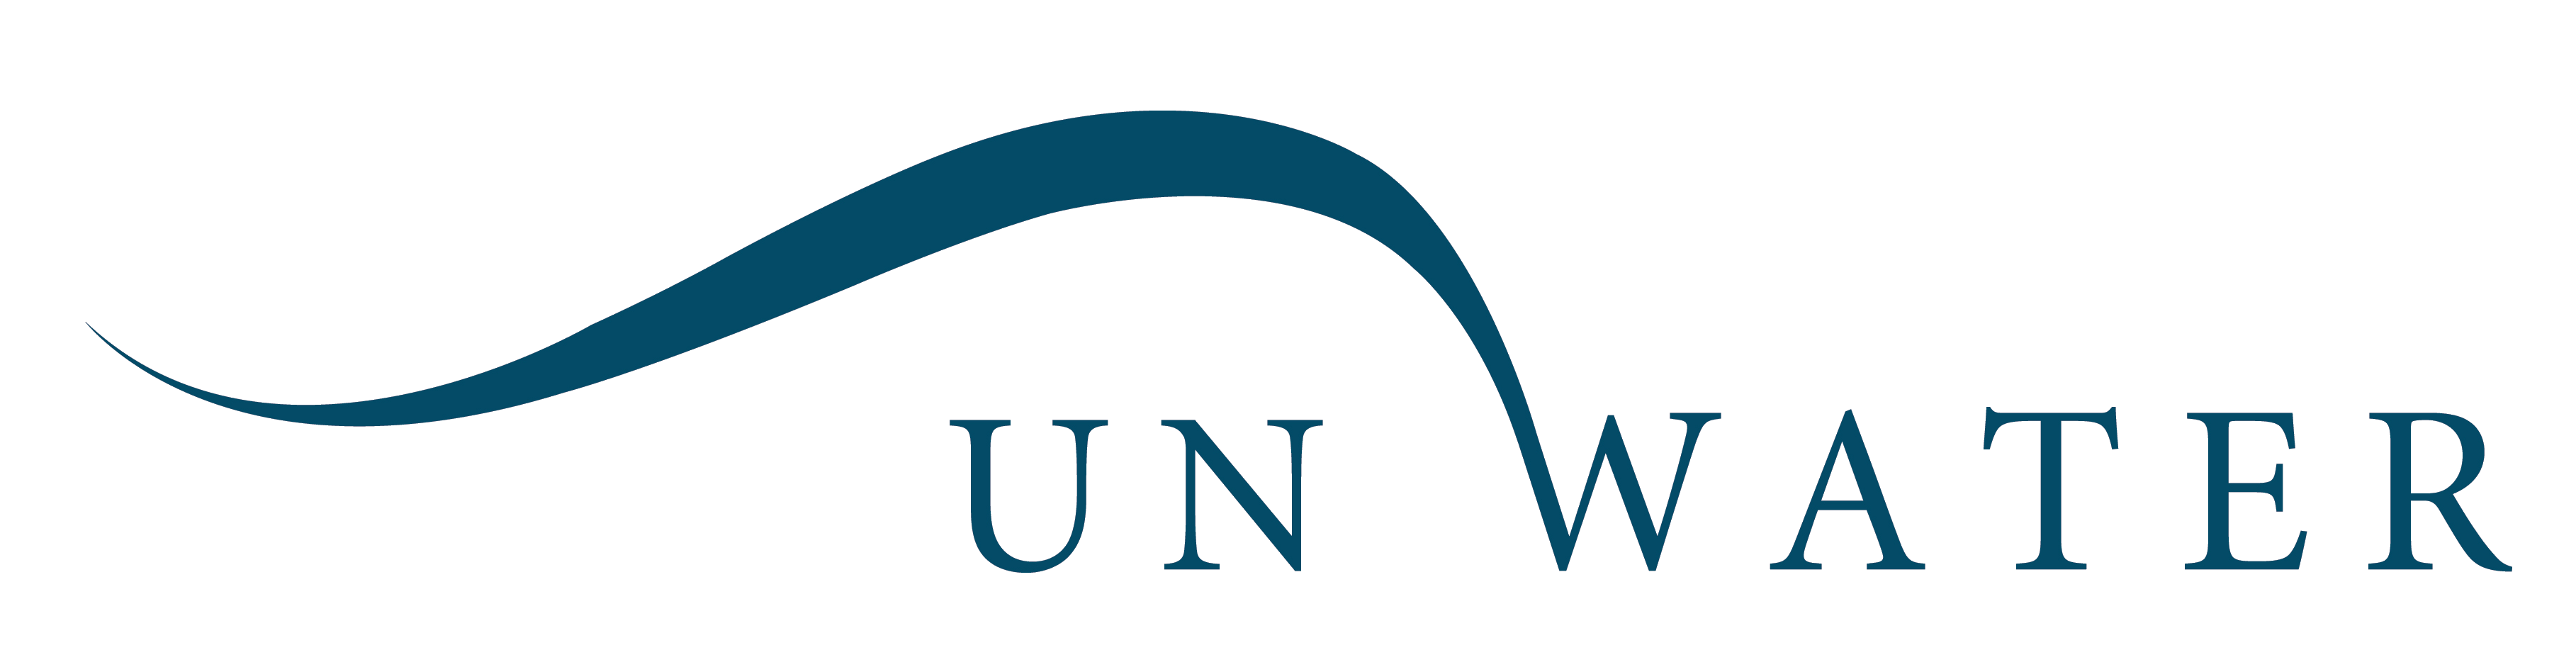 UN_Water_logo